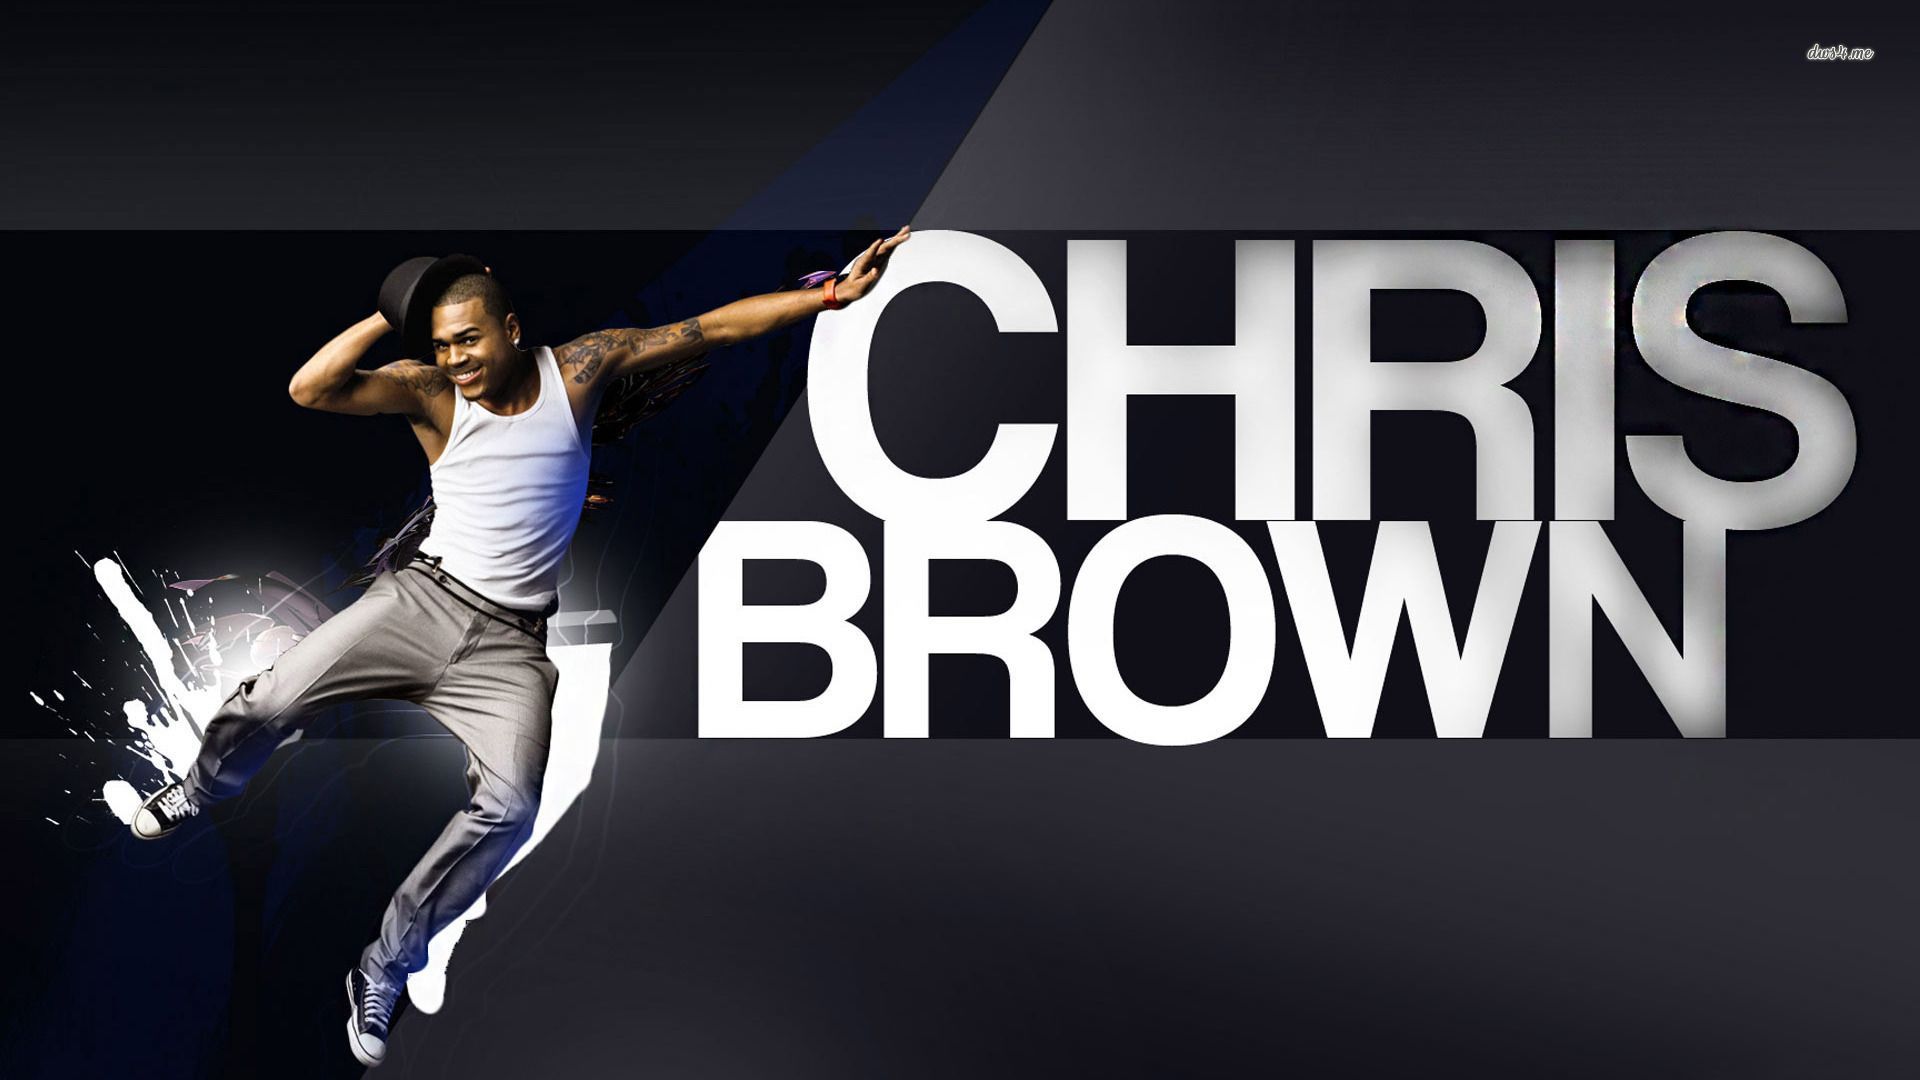 Chris Brown wallpaper - Music wallpapers